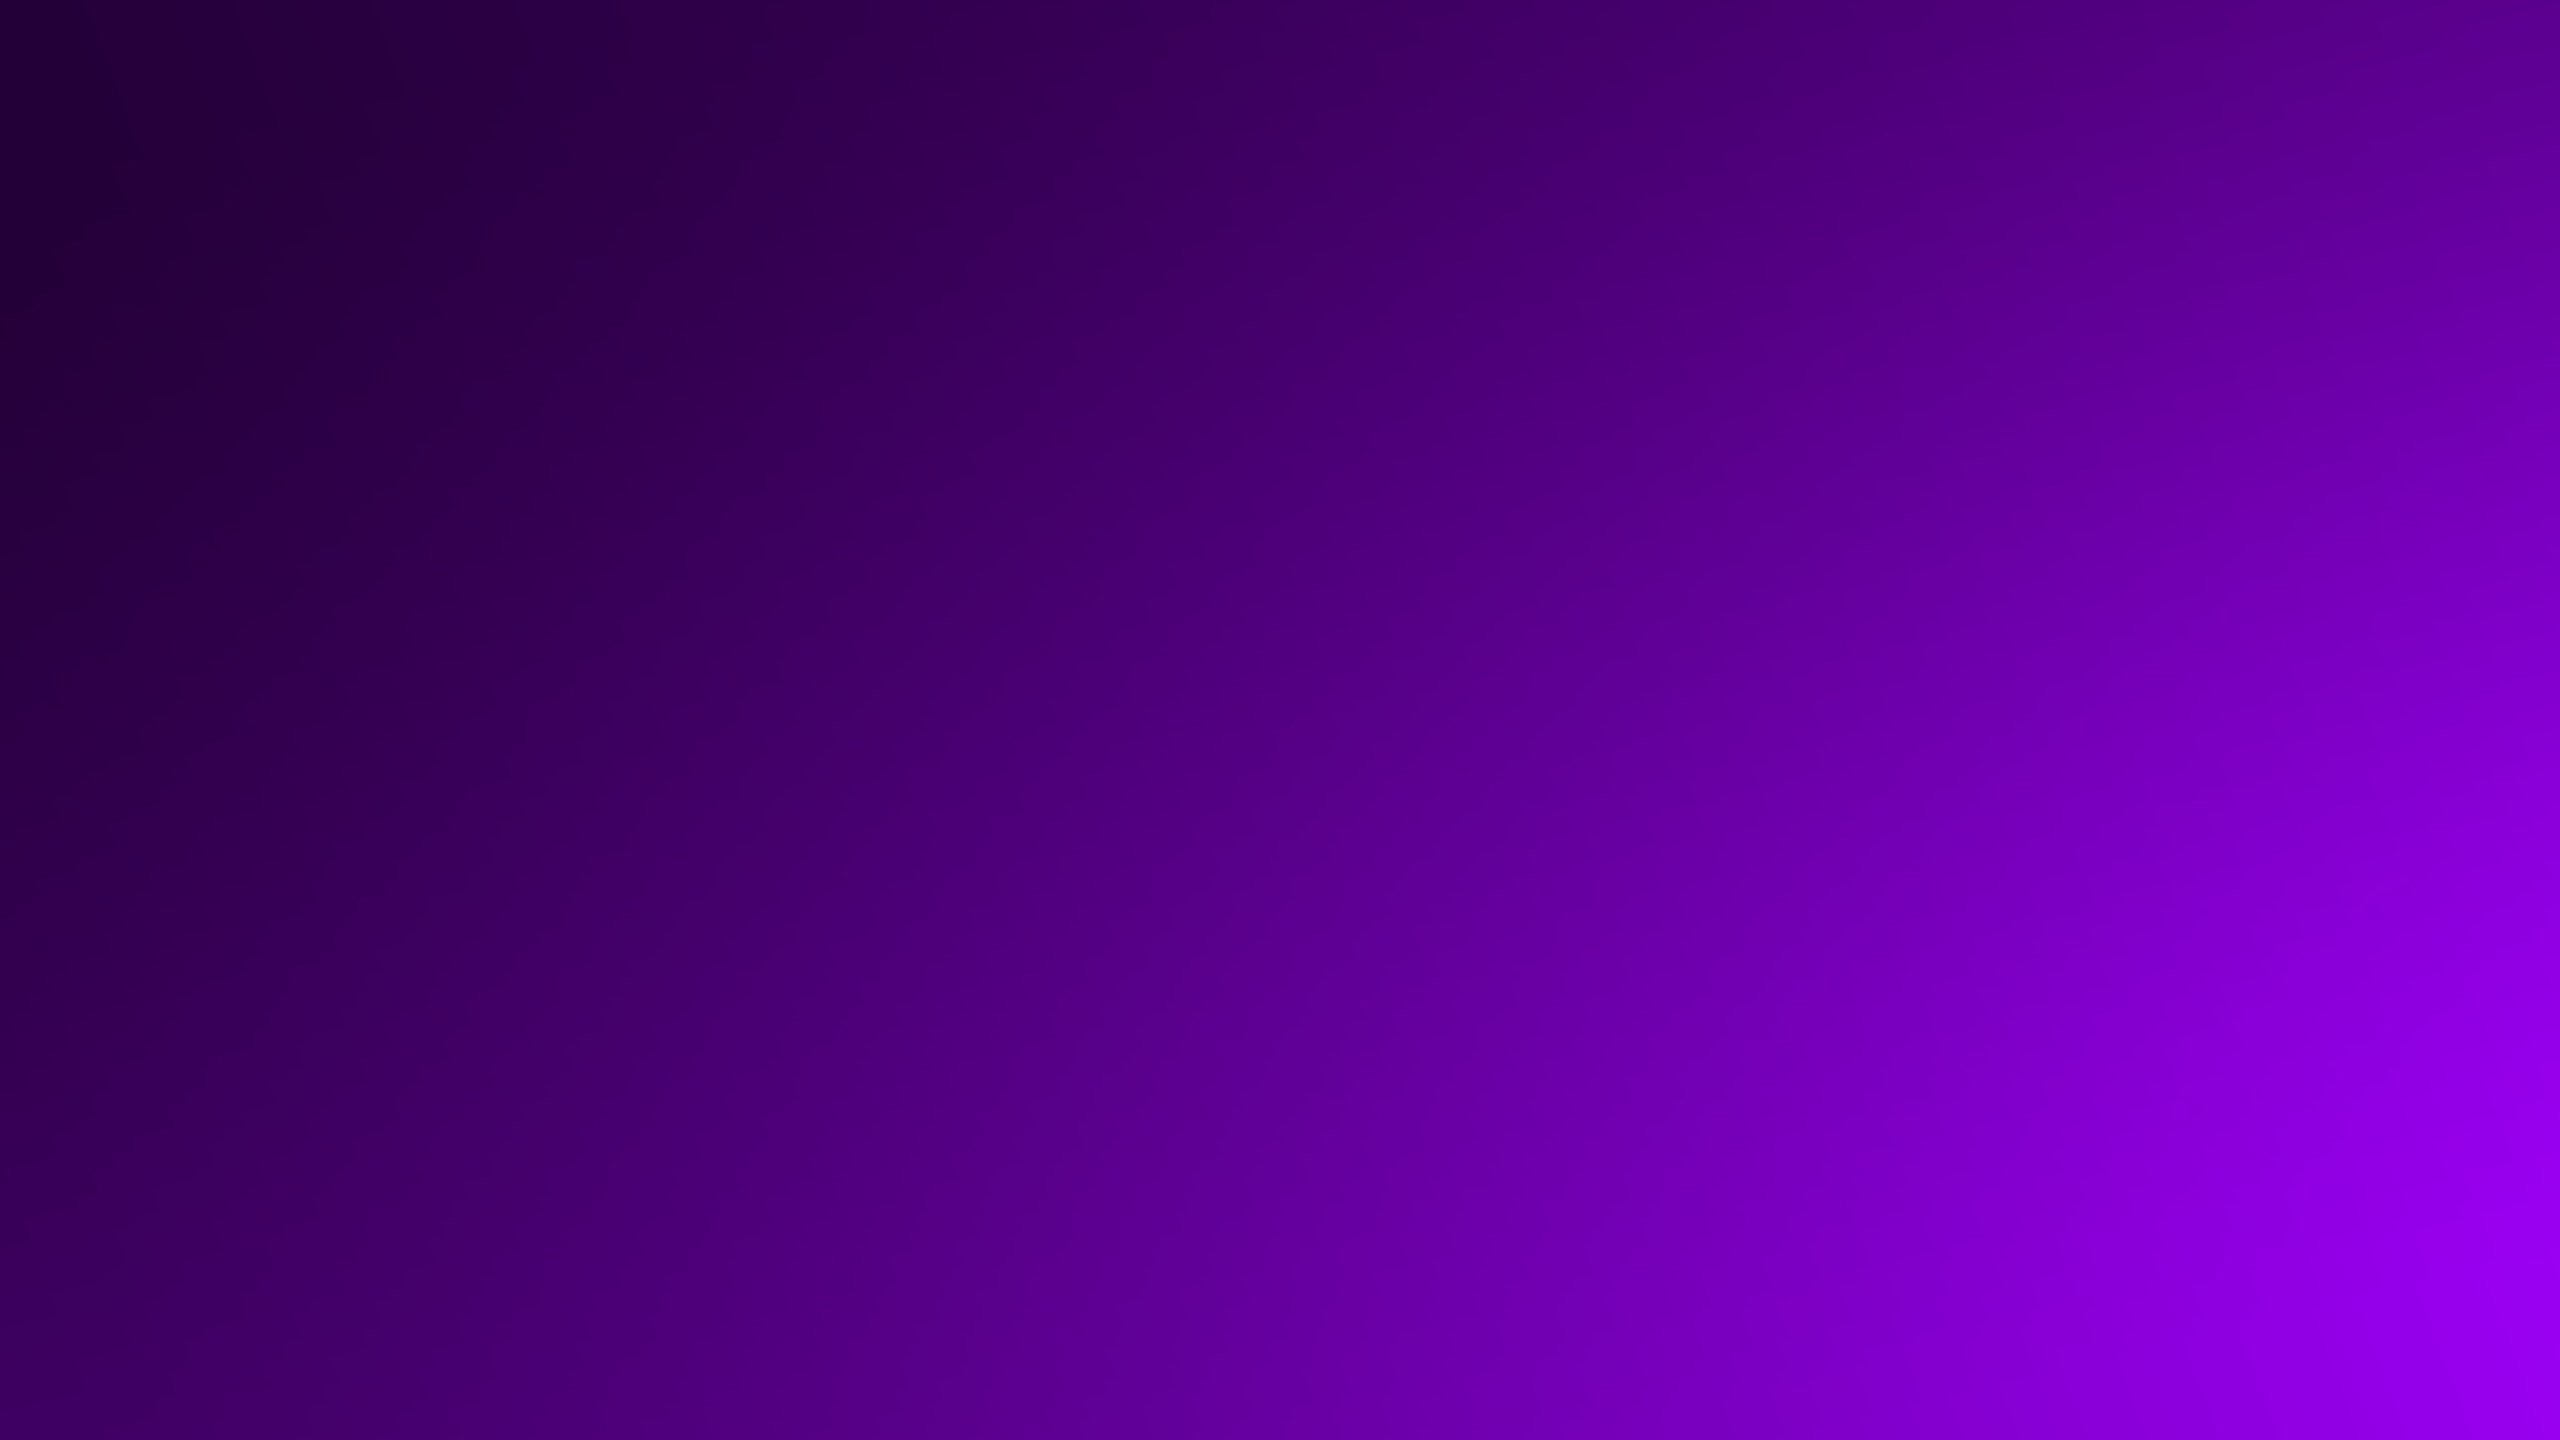 2560x1440 Solid Purple Background